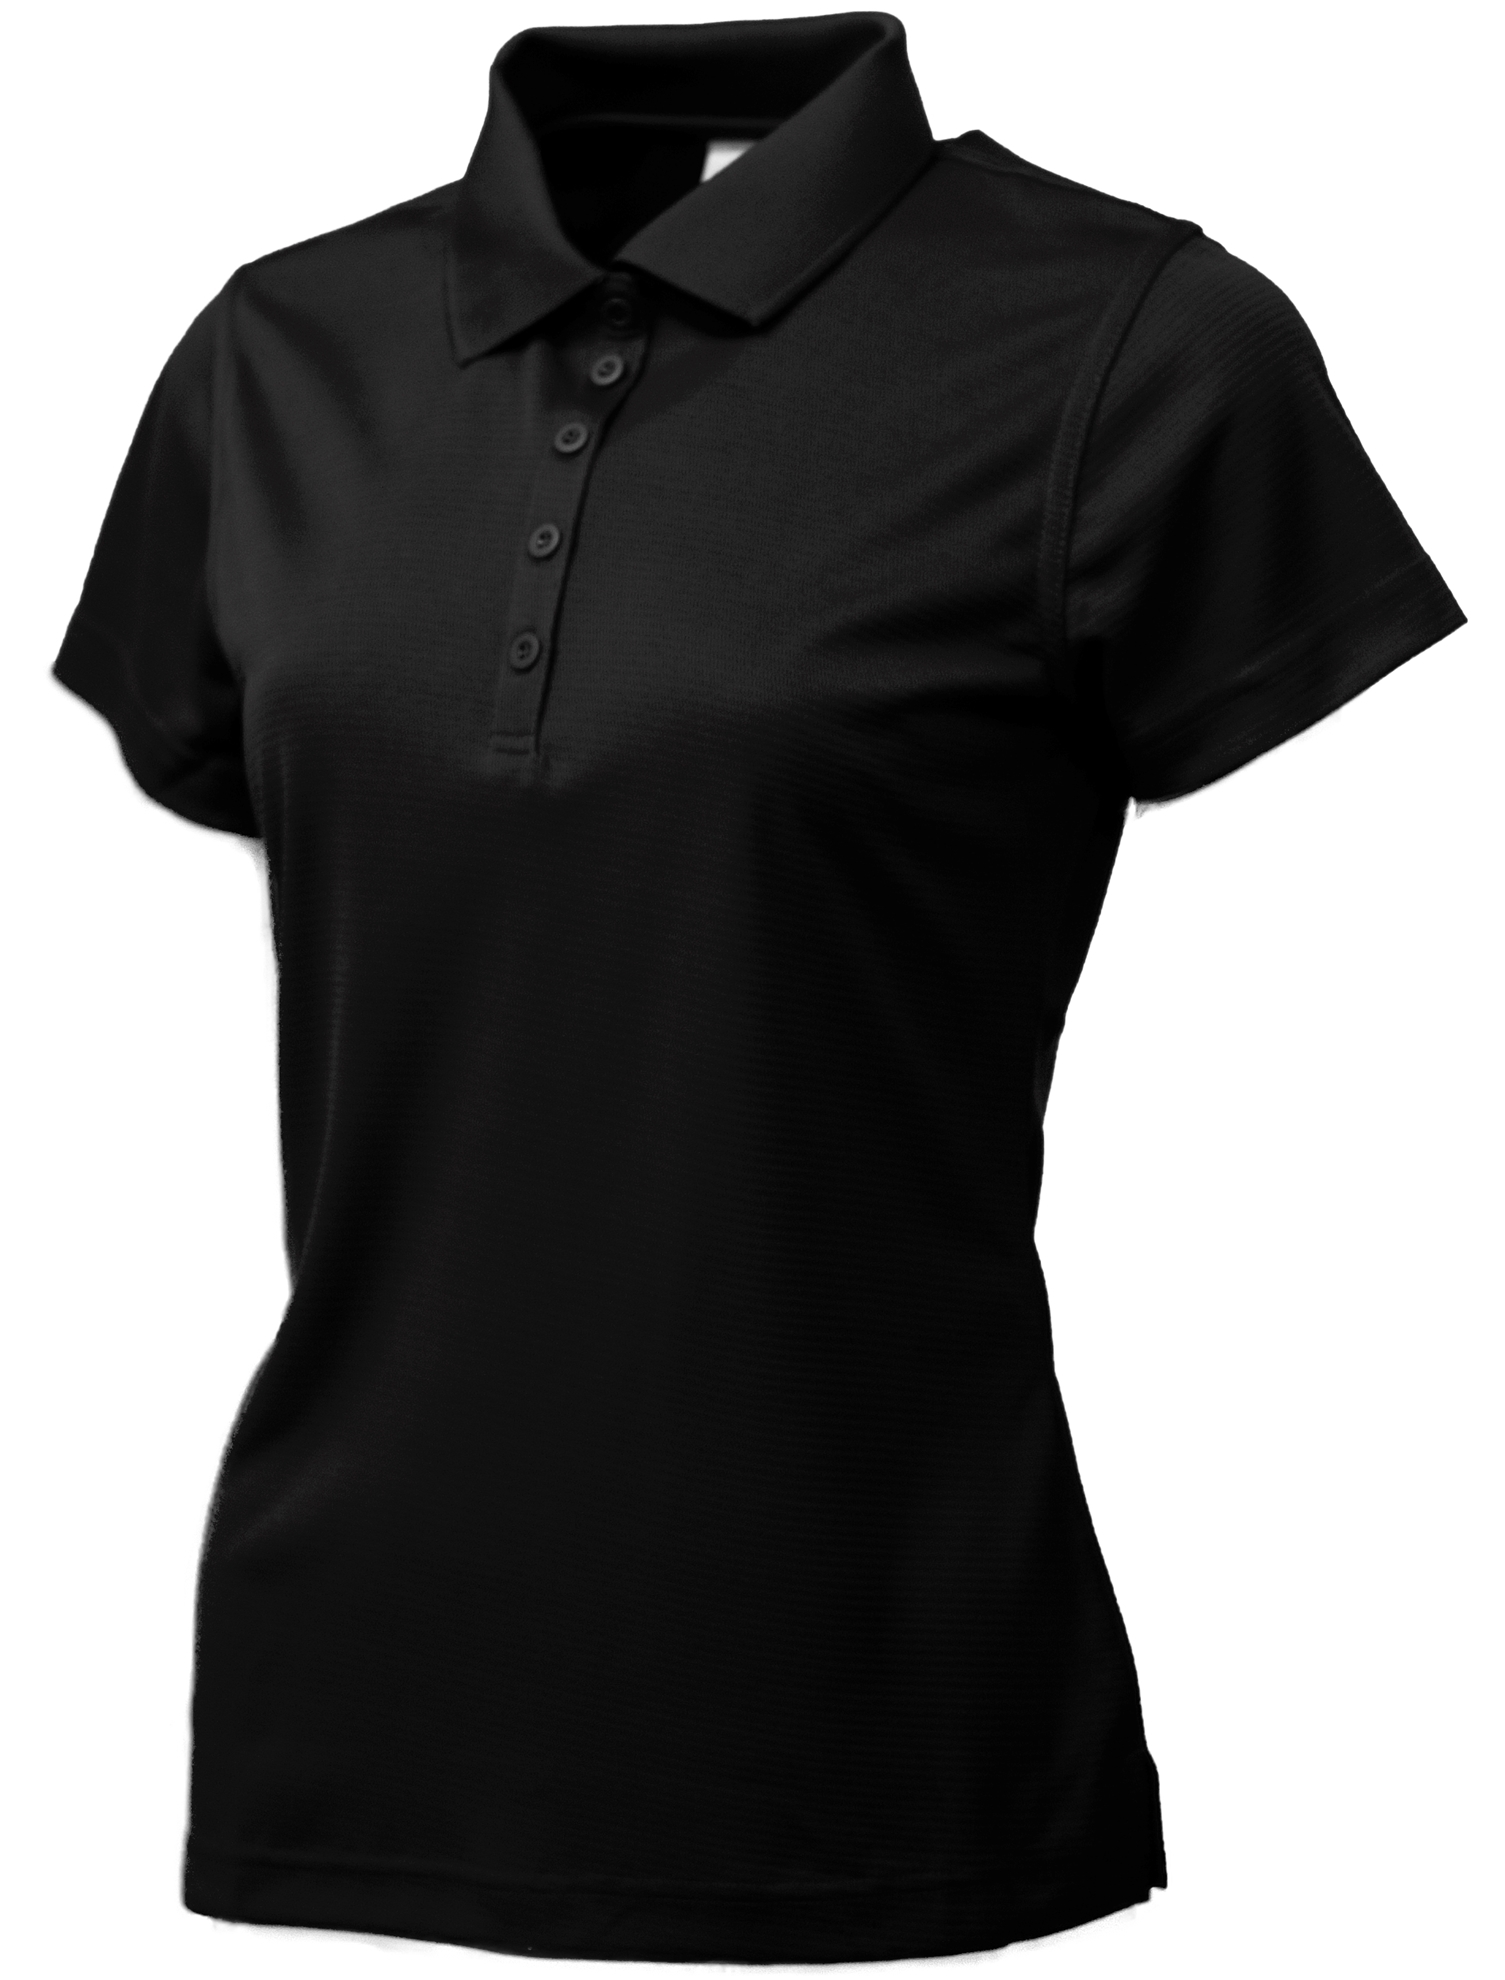 BAW Athletic Wear EC407 - Ladies Cool-Tek Short Sleeve Shirt